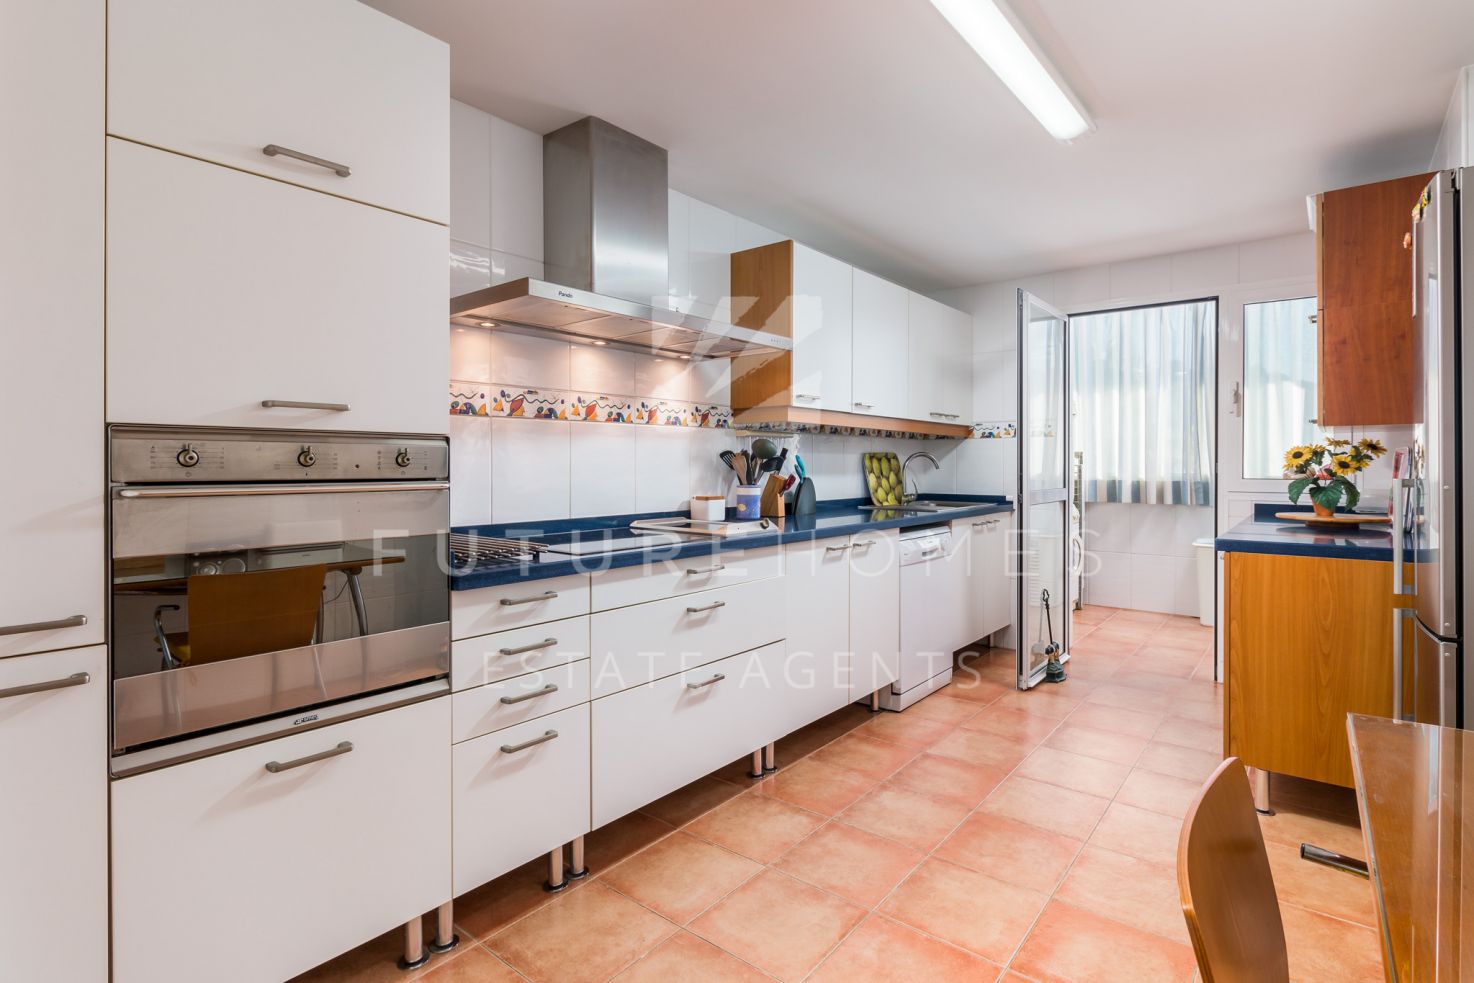 ABSOLUTE FRONTLINE BEACH - 3 bedroom apartment in the prestigious El Coral urbanisation near Estepona port!